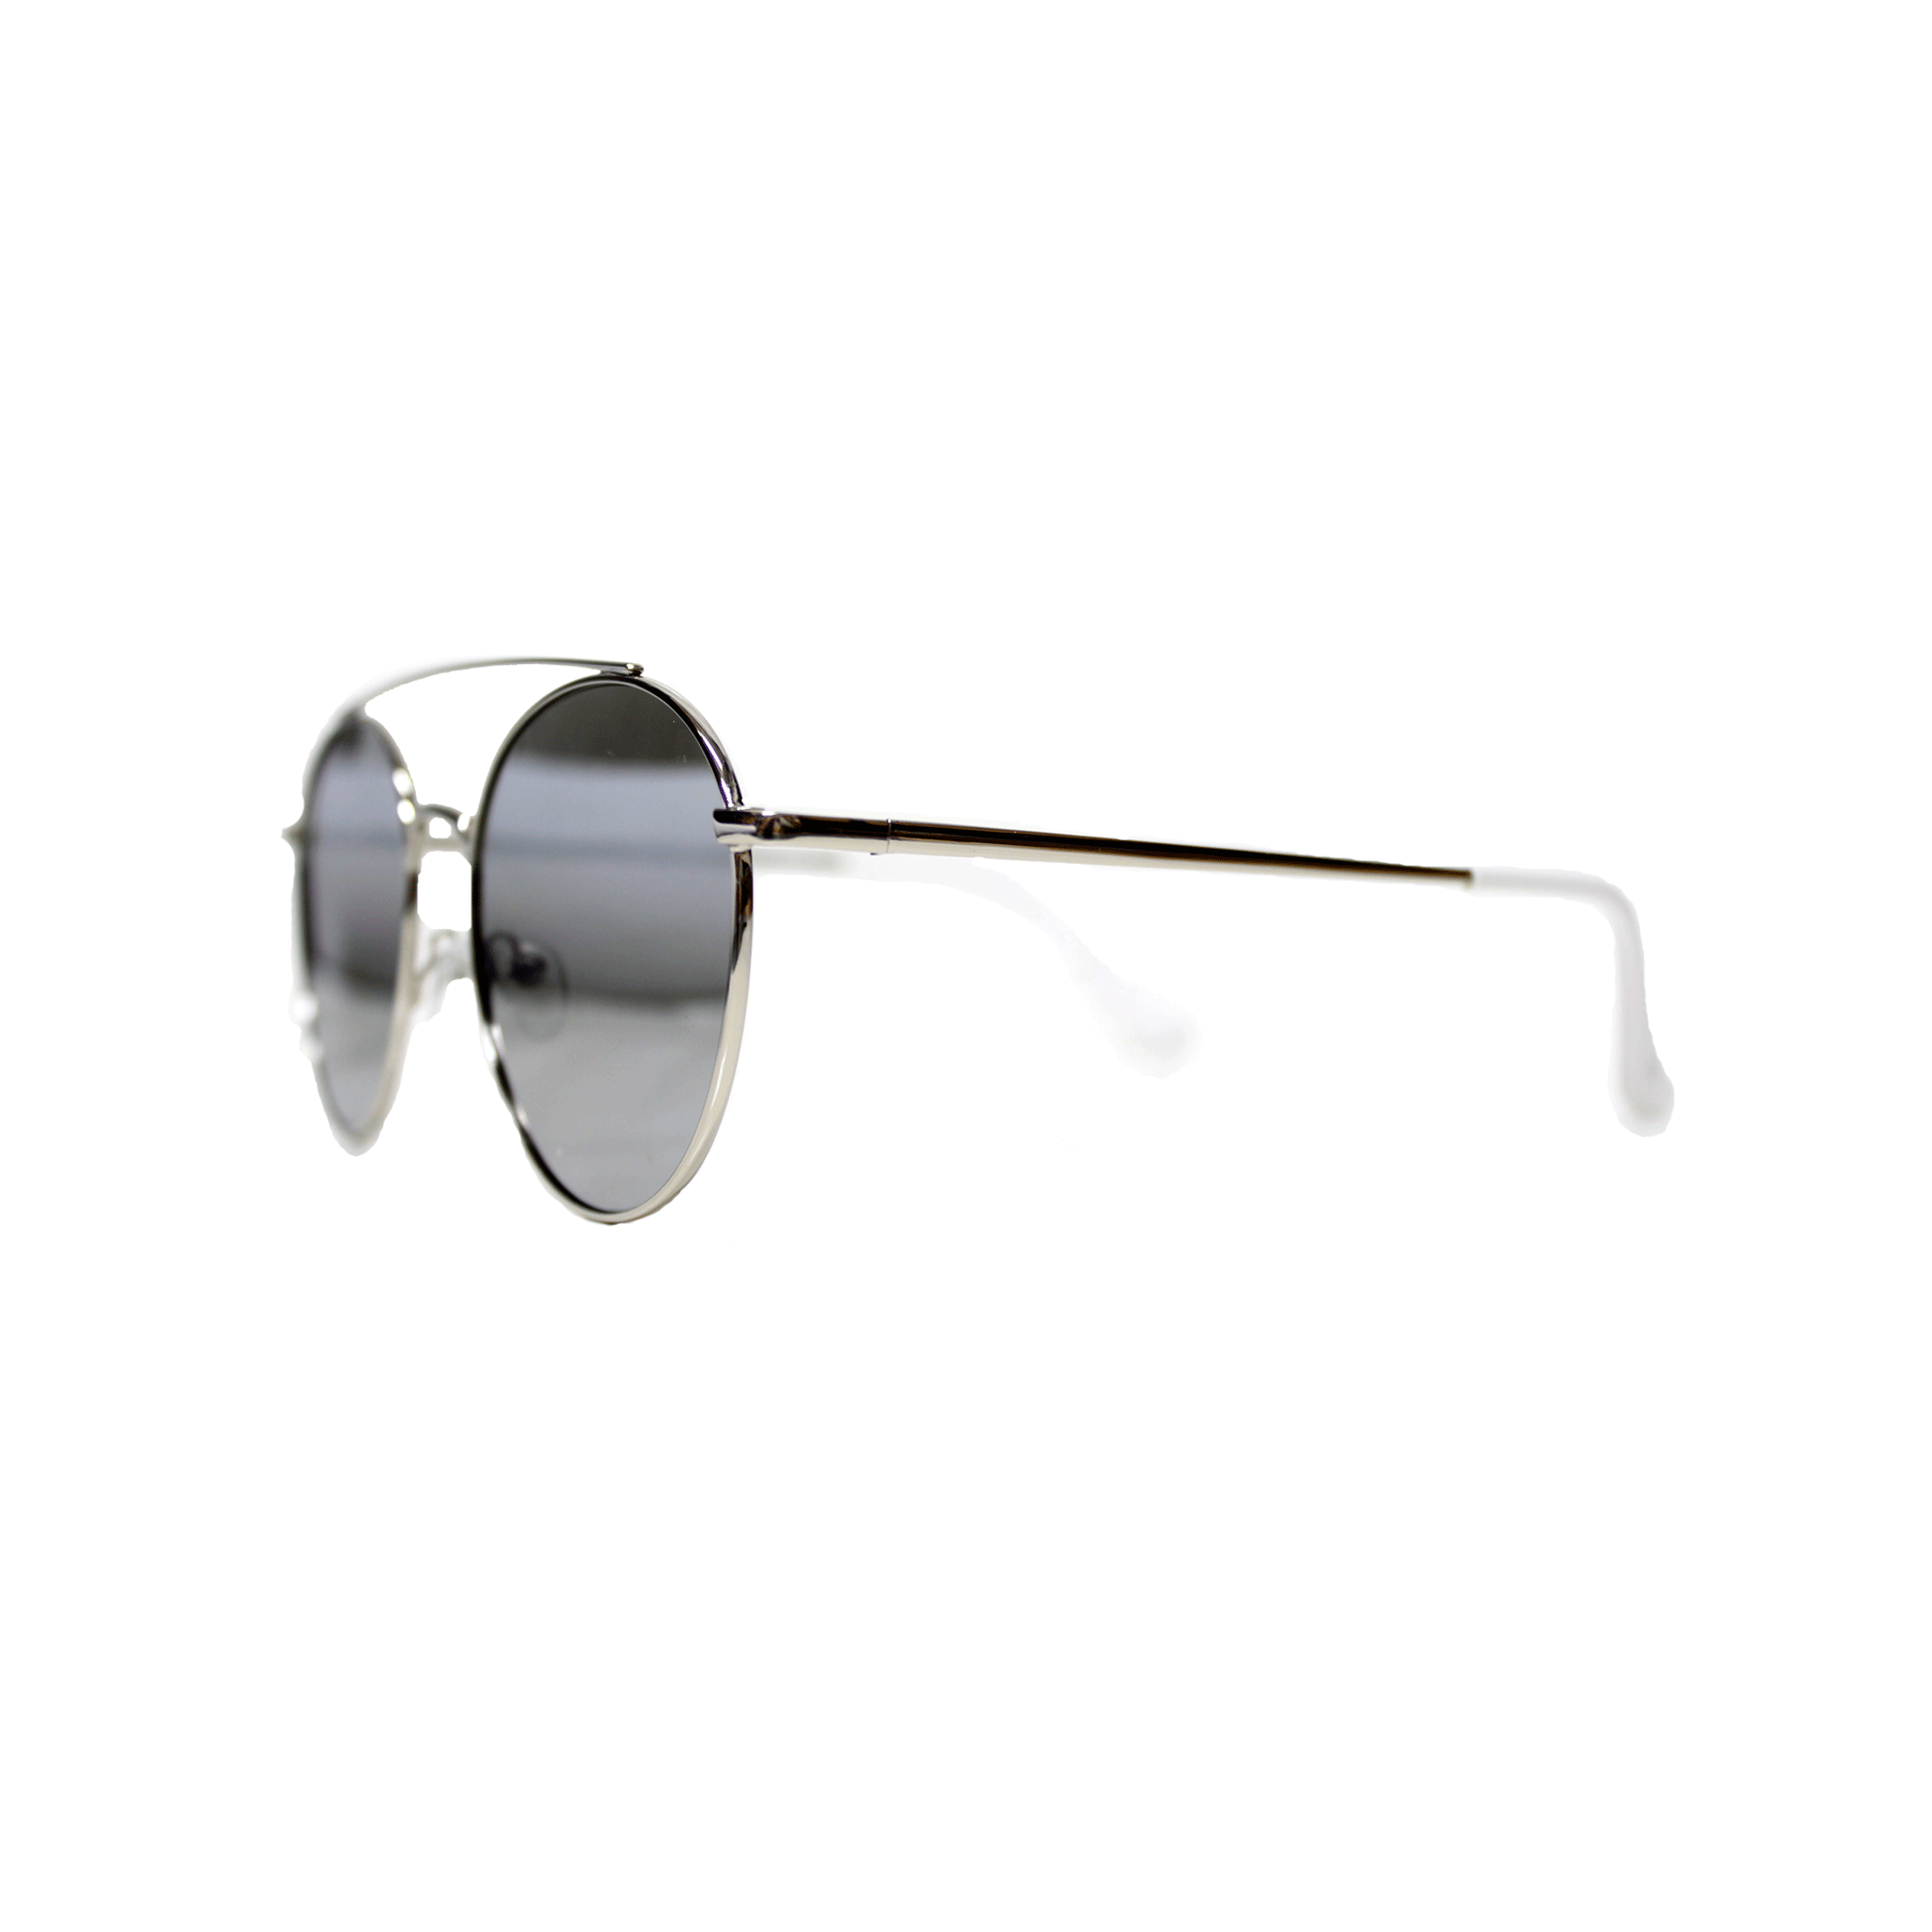 Parasol #4 - Silver SunGlasses TARBAY   